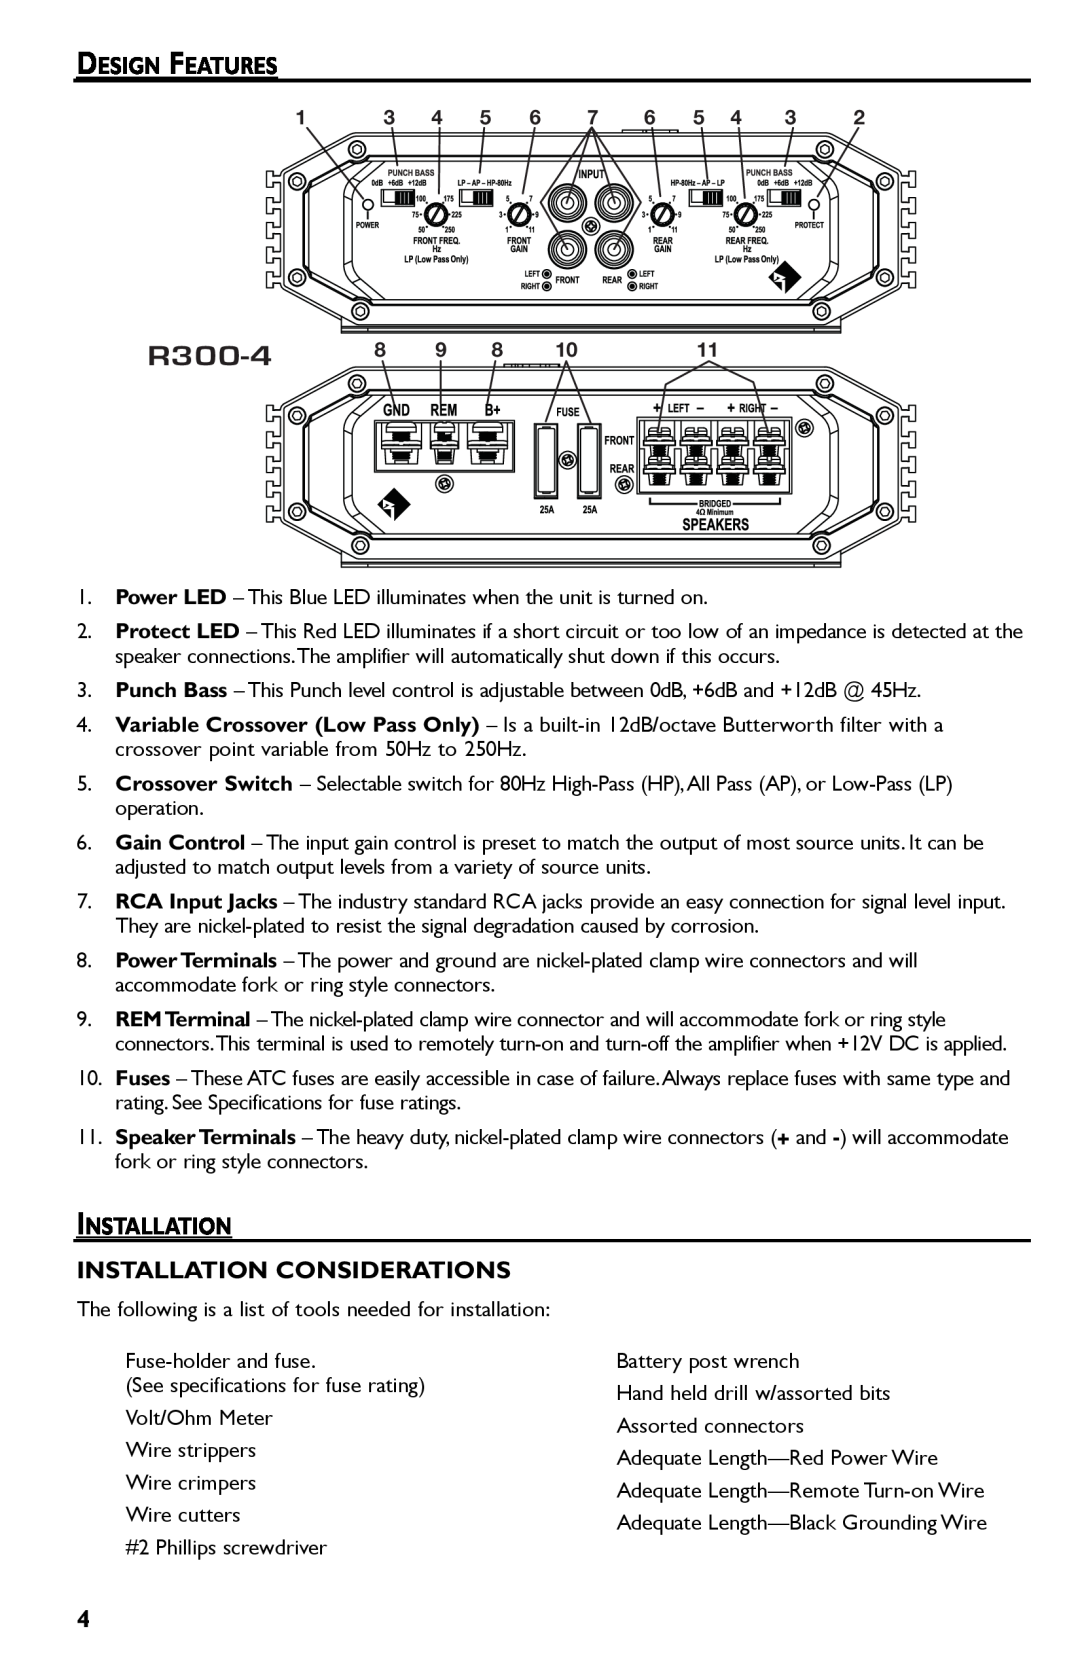 Rockford Fosgate R300-4 manual Design Features, Installation Installation Considerations 